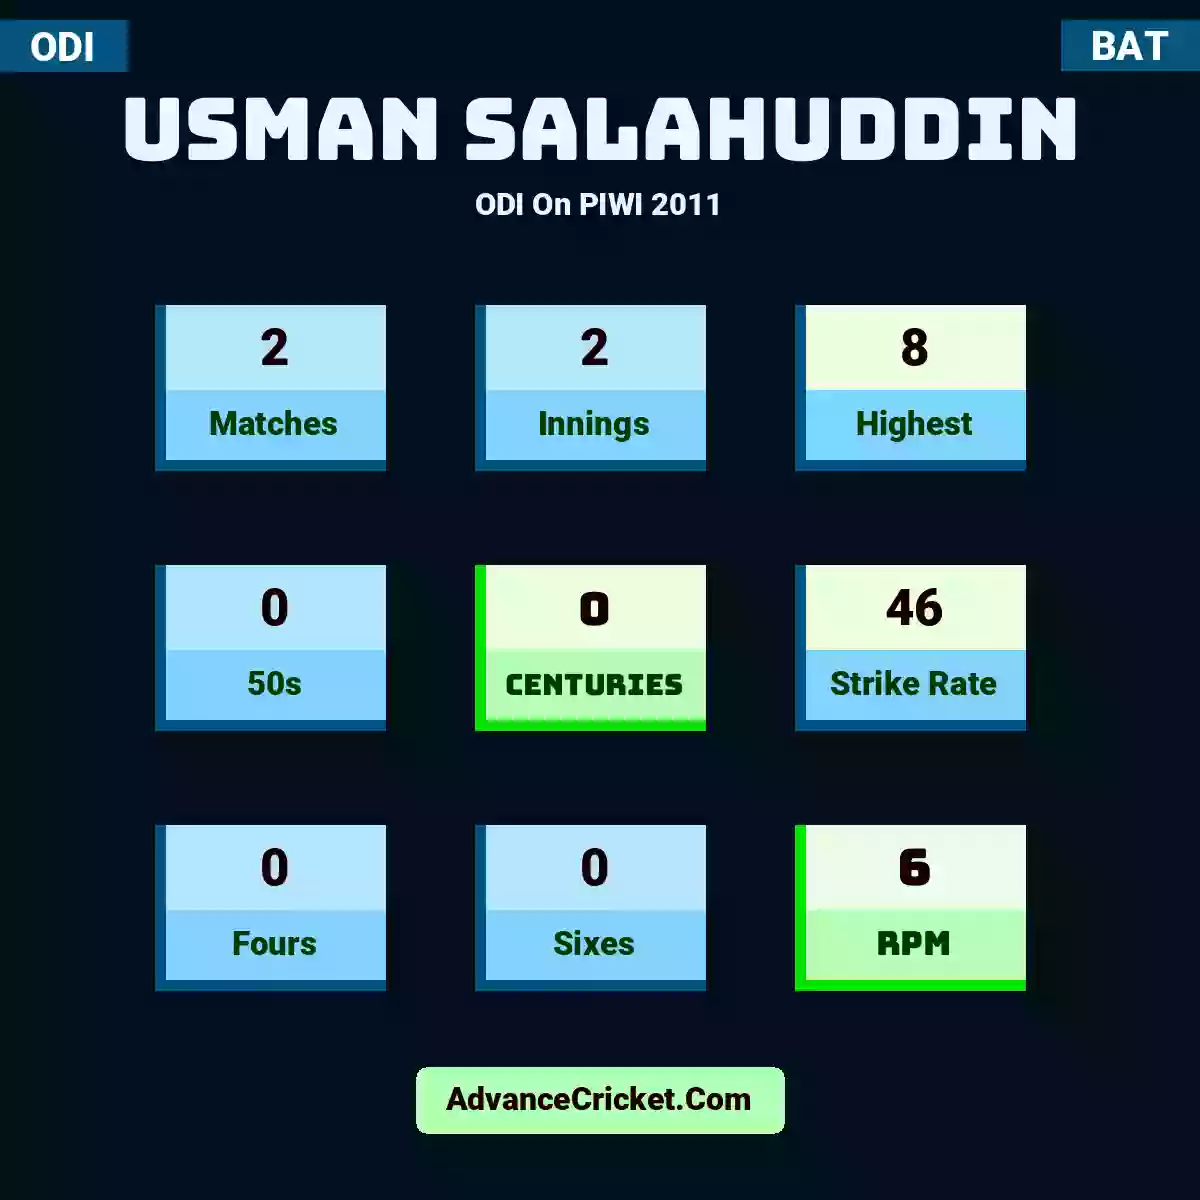 Usman Salahuddin ODI  On PIWI 2011, Usman Salahuddin played 2 matches, scored 8 runs as highest, 0 half-centuries, and 0 centuries, with a strike rate of 46. U.Salahuddin hit 0 fours and 0 sixes, with an RPM of 6.